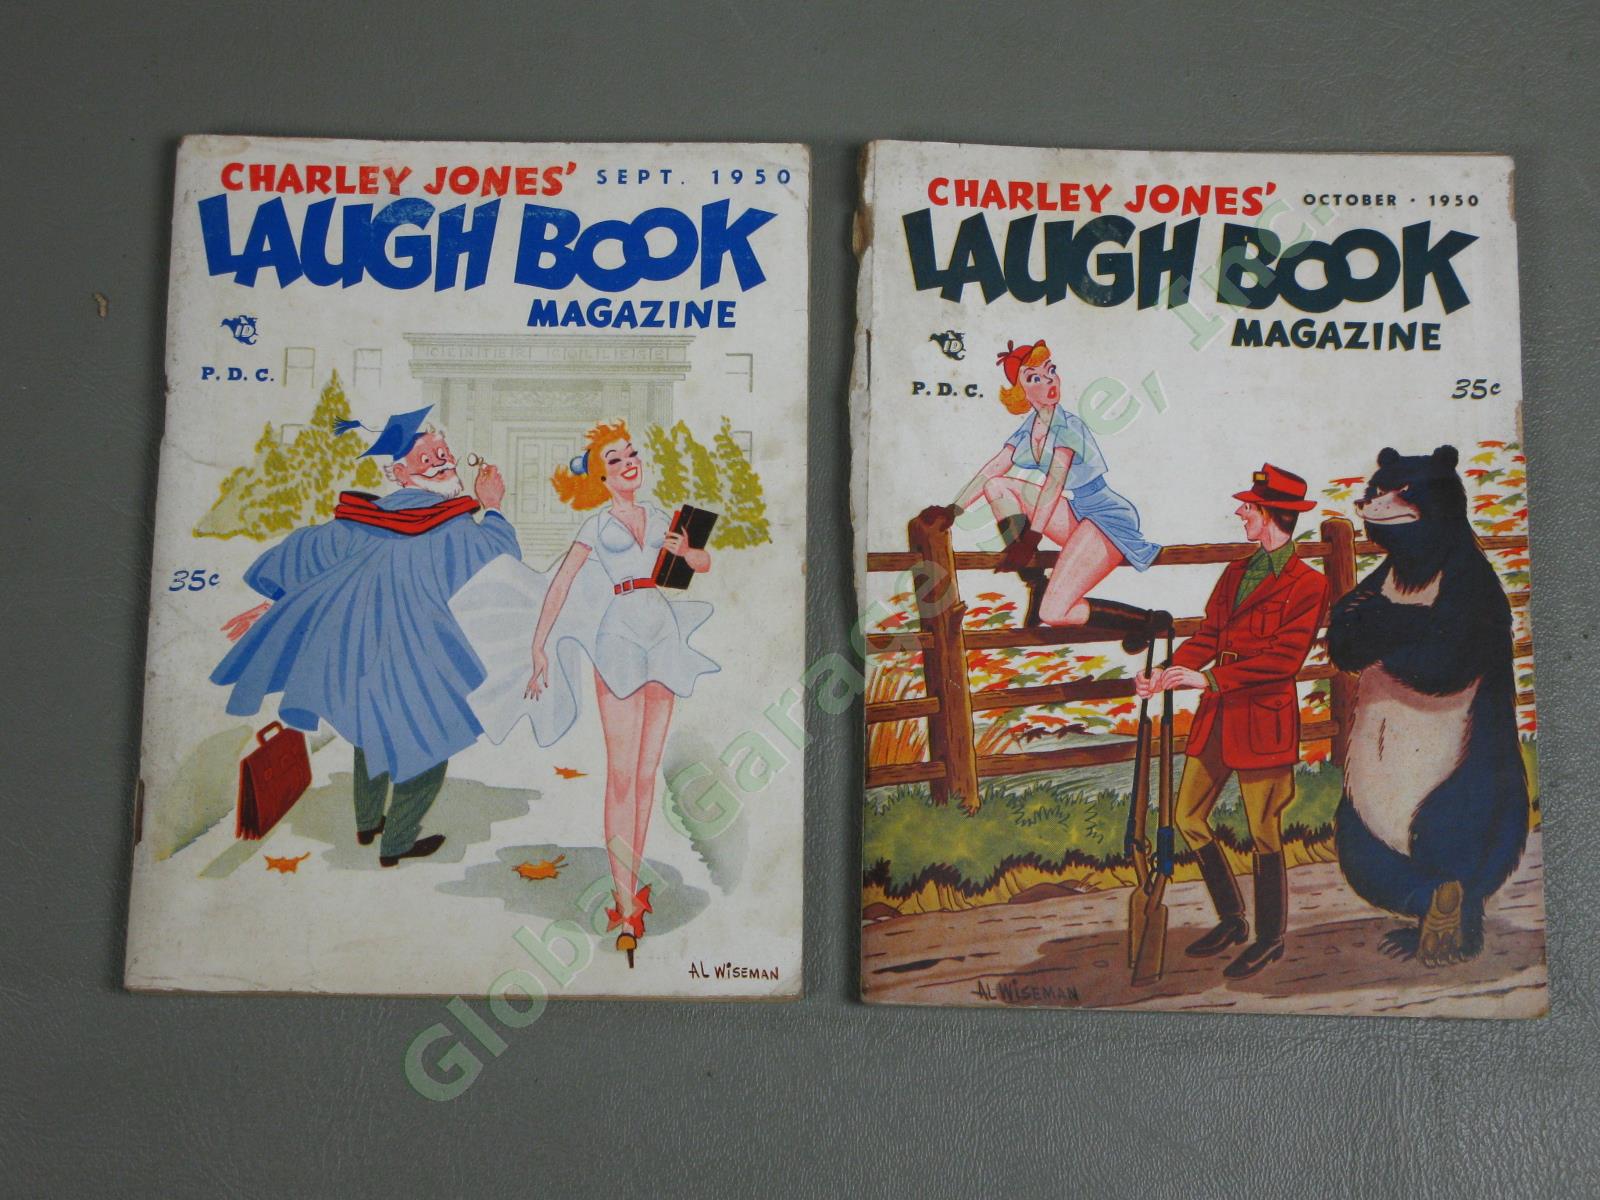 22 Vintage 1947-1950 Charley Jones Laugh Book Magazines Lot Risque Adult Humor 10